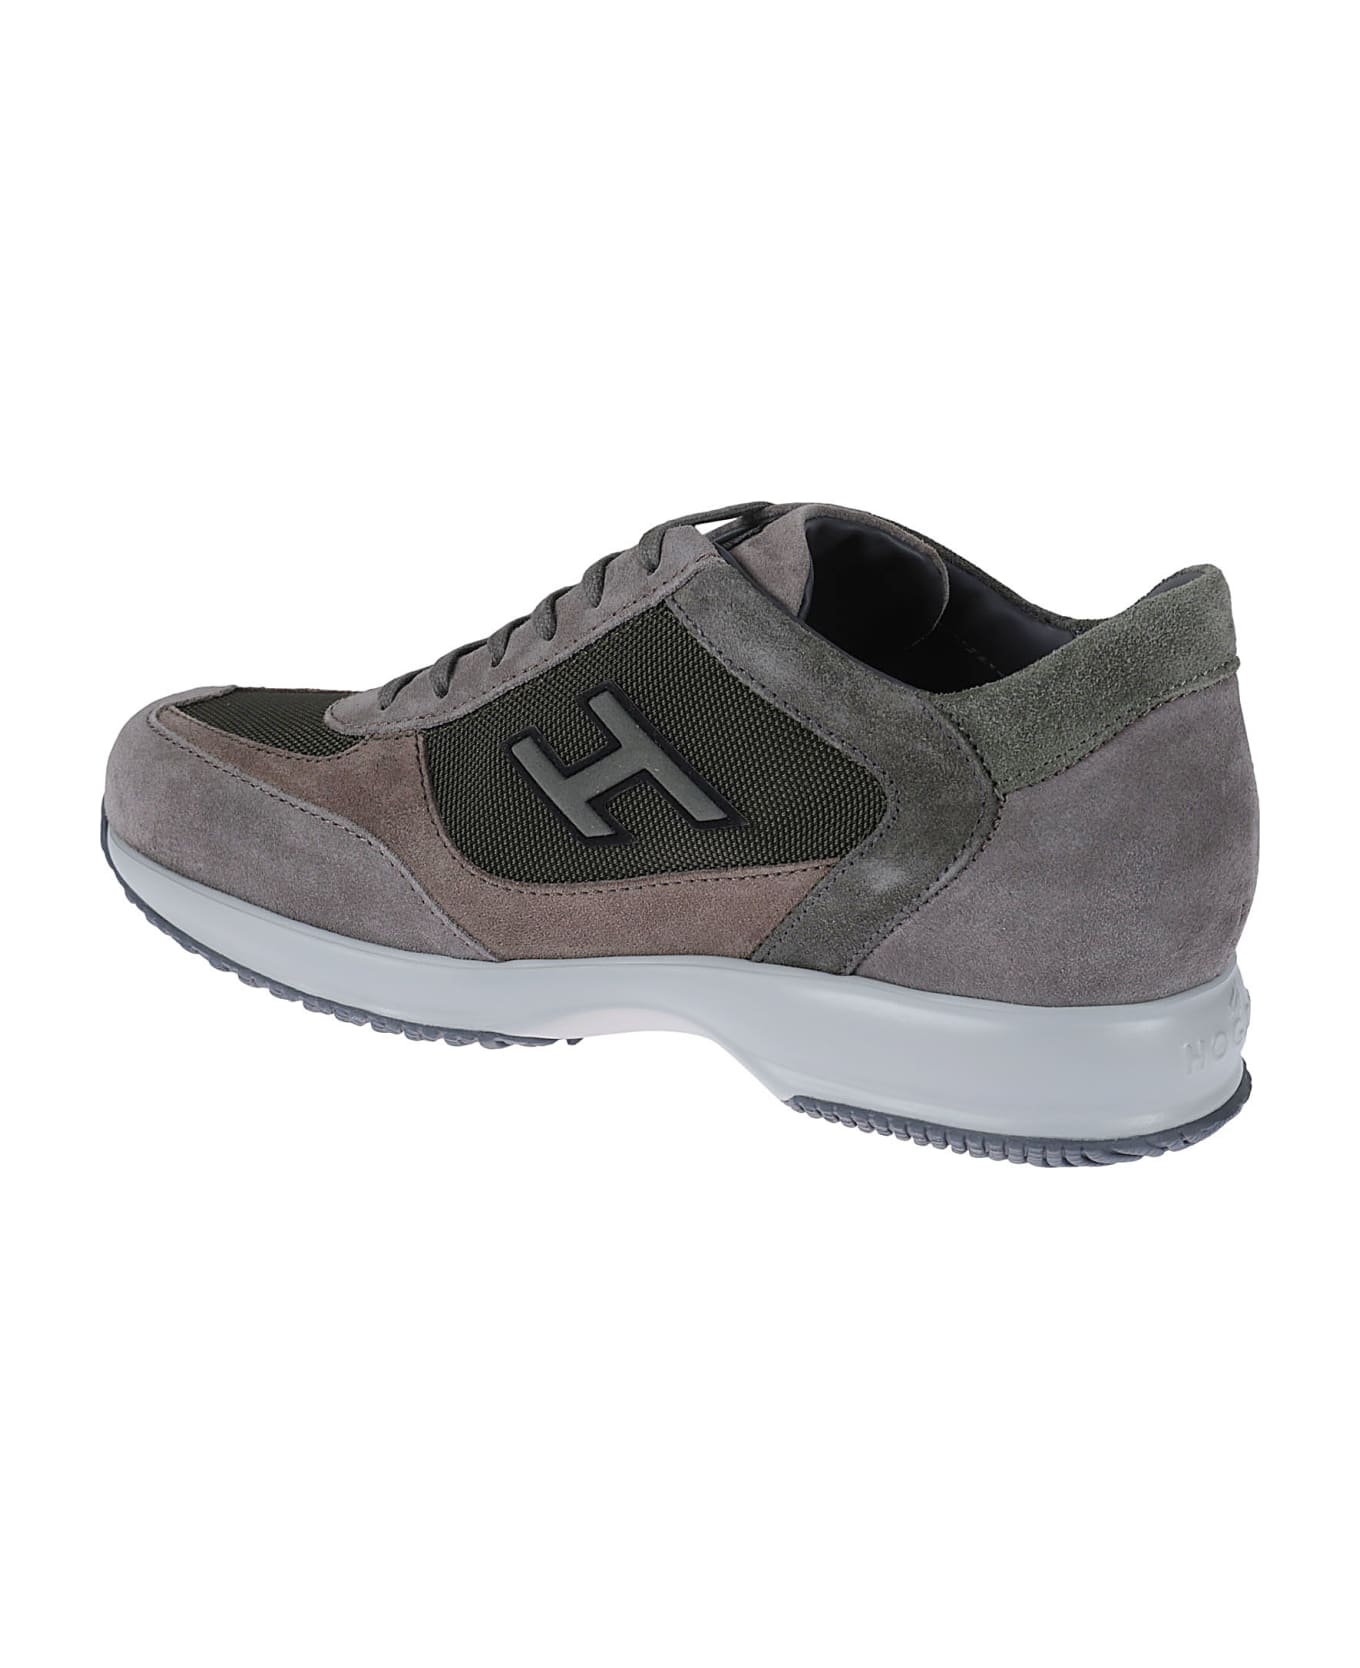 Hogan Interactive Gflock Sneakers - Taupe